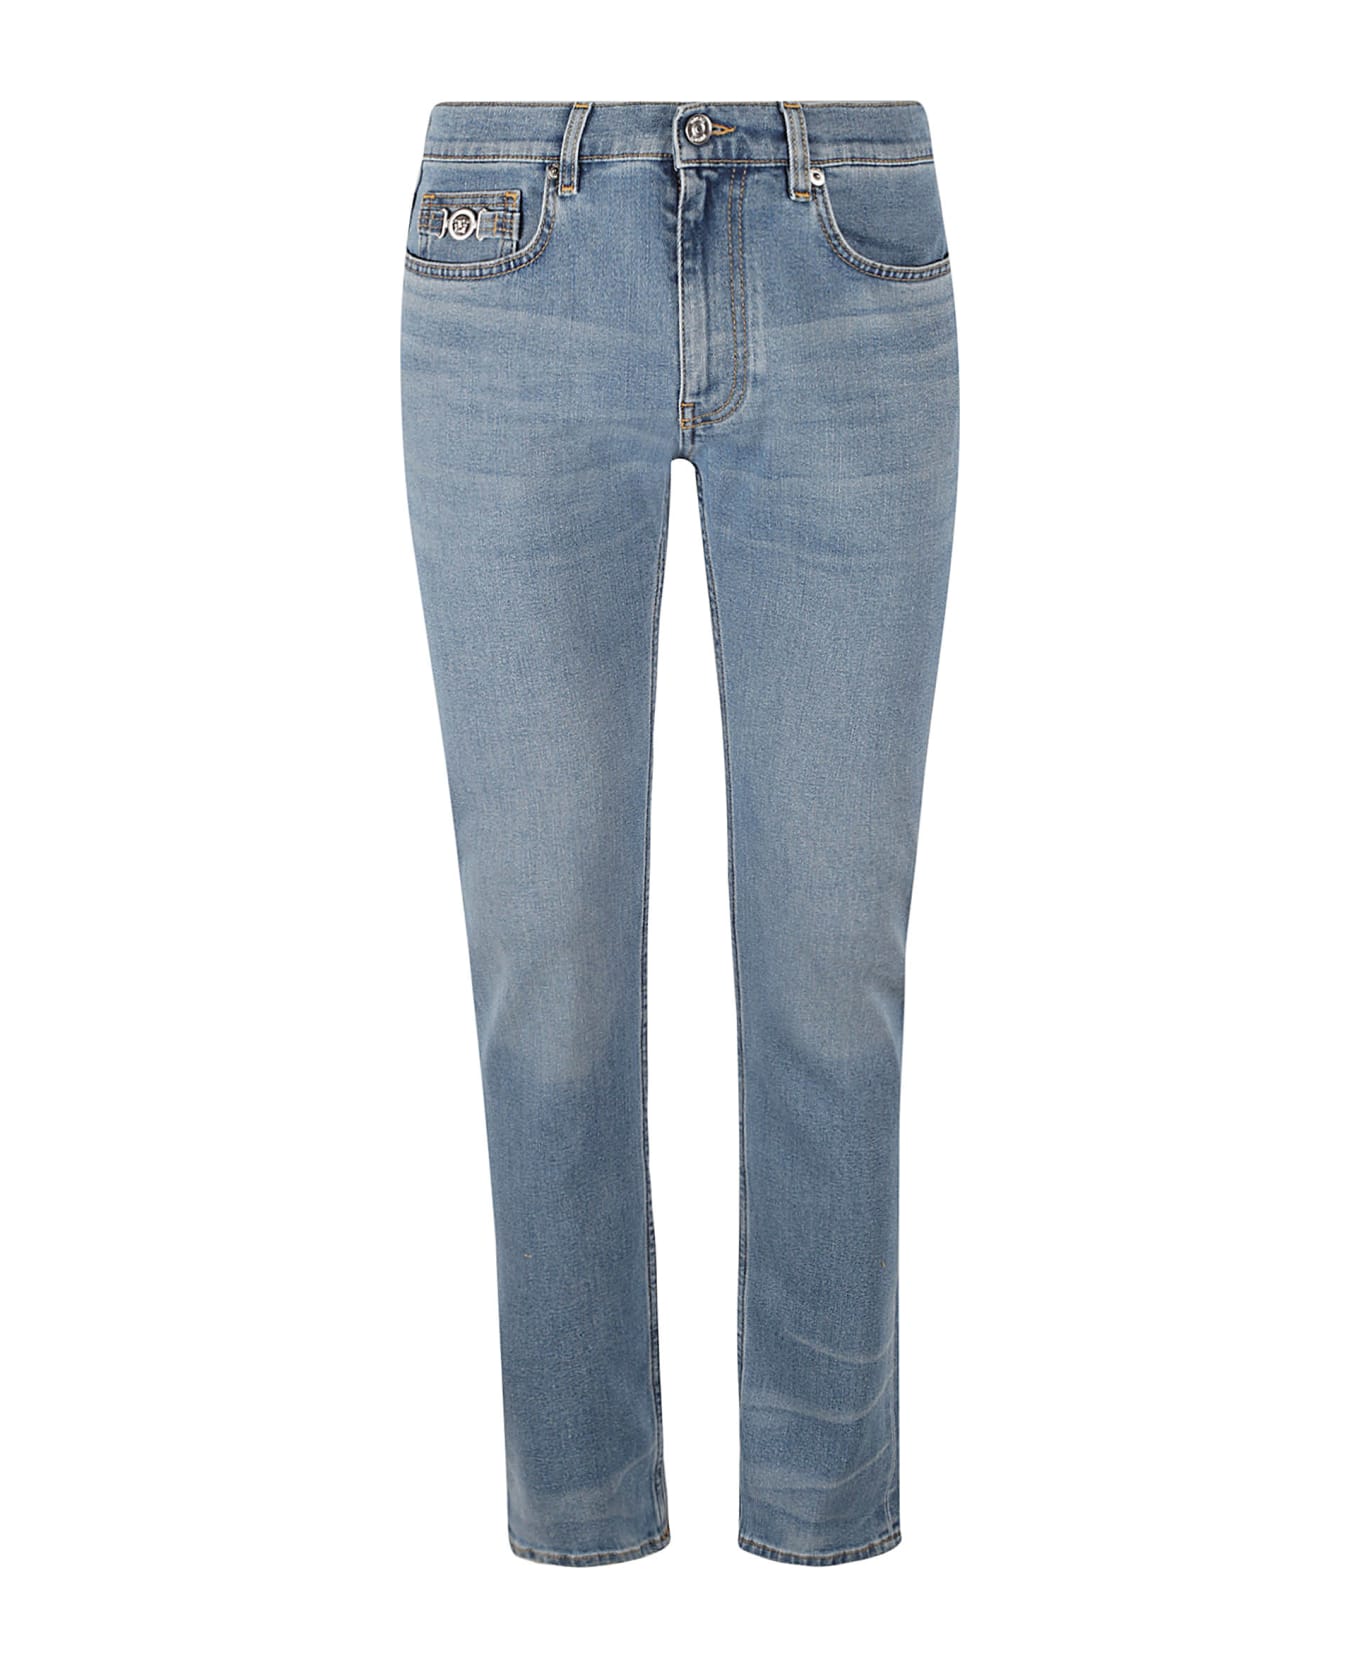 Versace Denim Stretch Jeans - FADED LIGHT BLUE